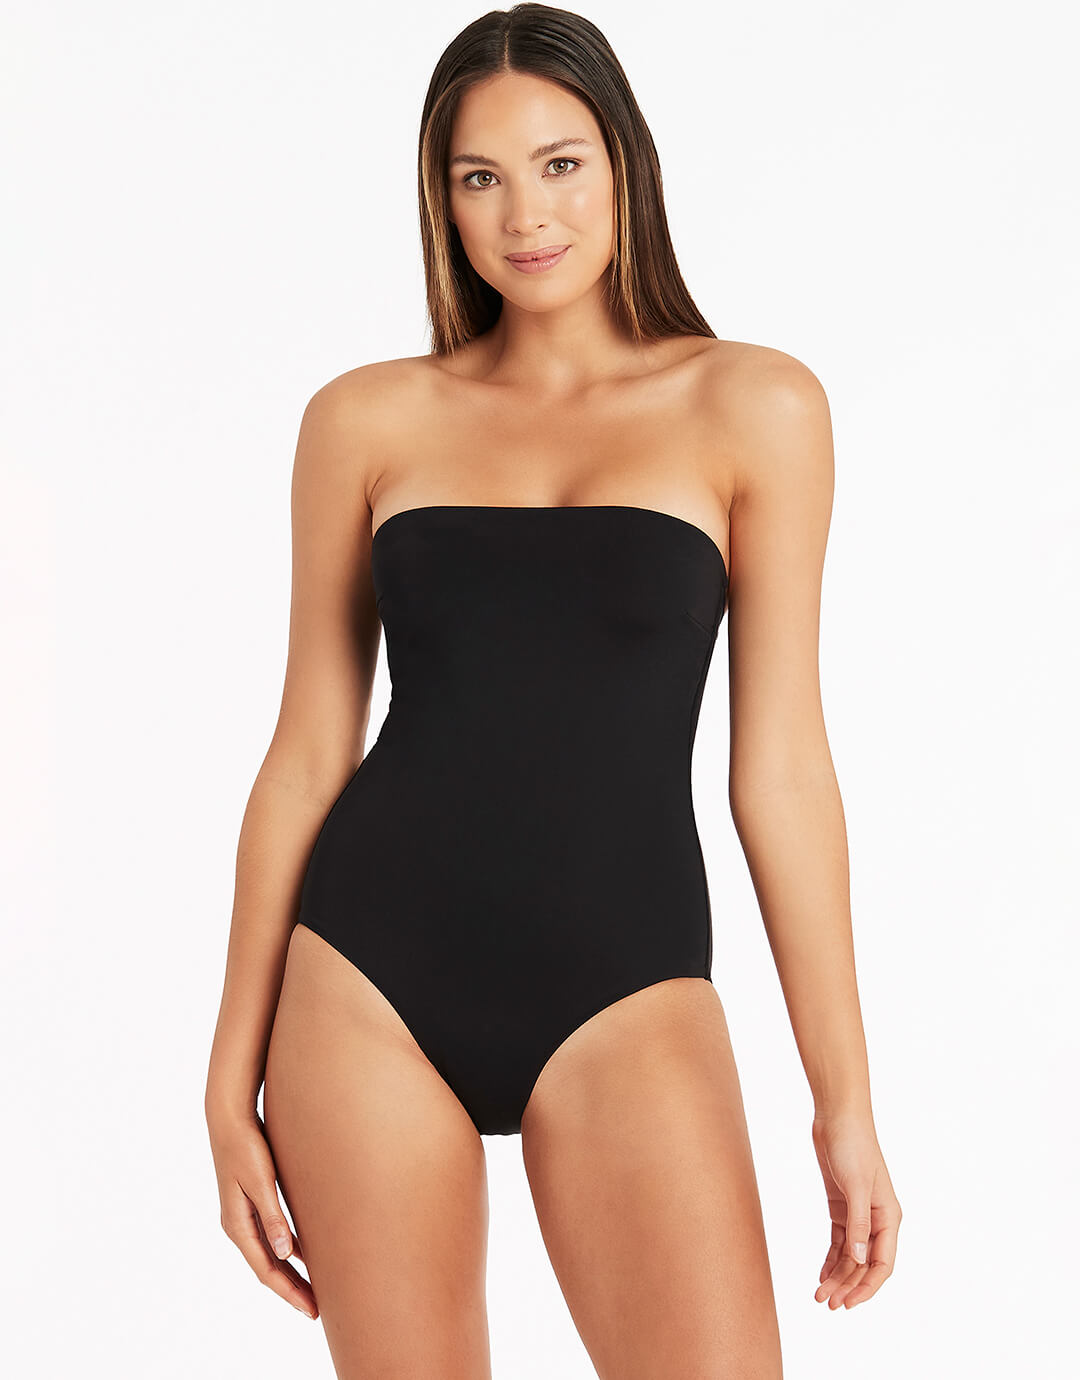 Essentials High Leg Bandeau Swimsuit - Black - Simply Beach UK